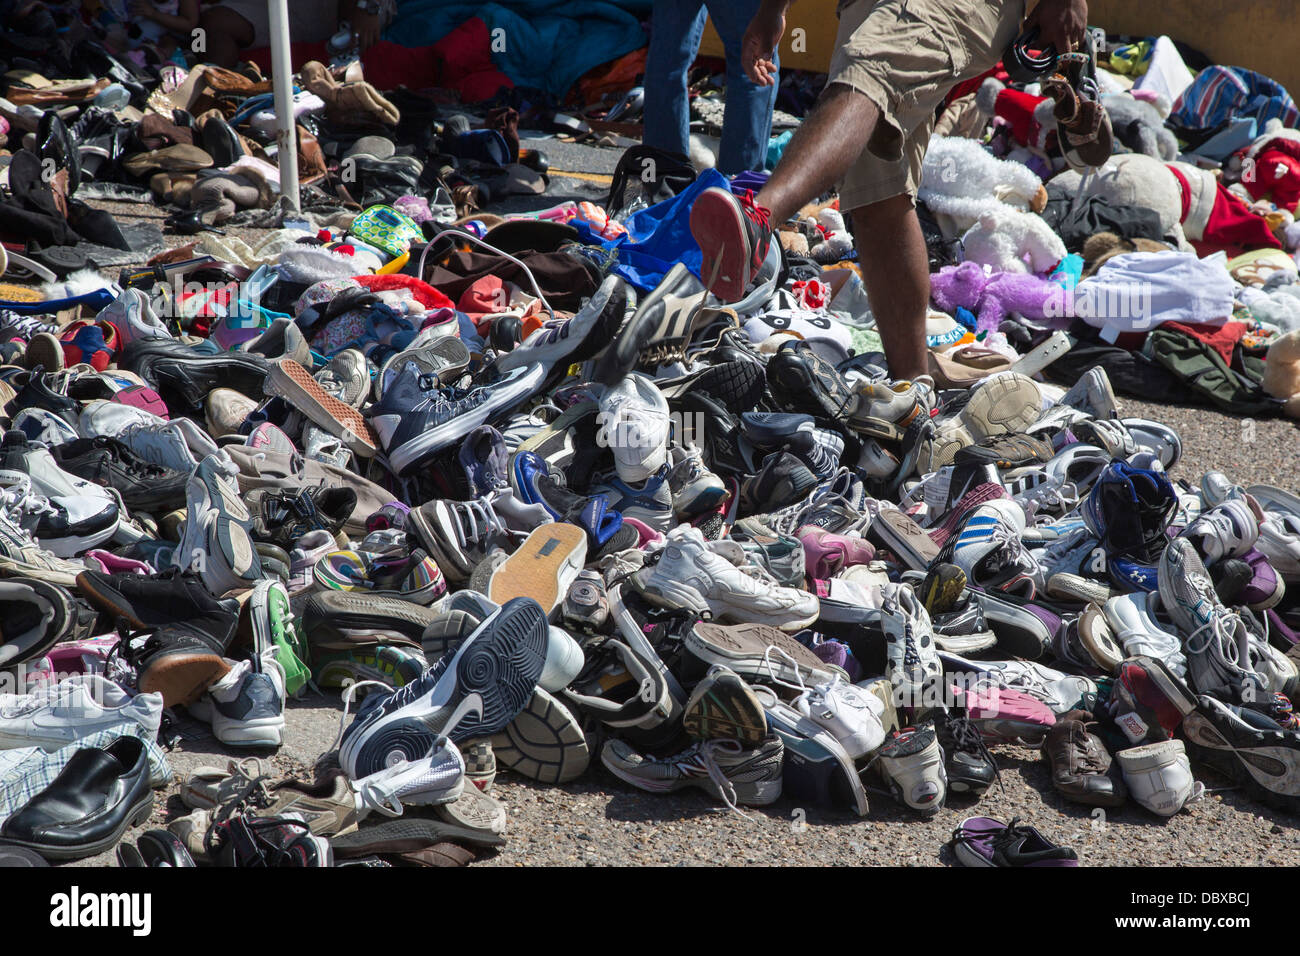 Hidalgo, Texas - Shoes on sale at an open-air flea market. Stock Photo